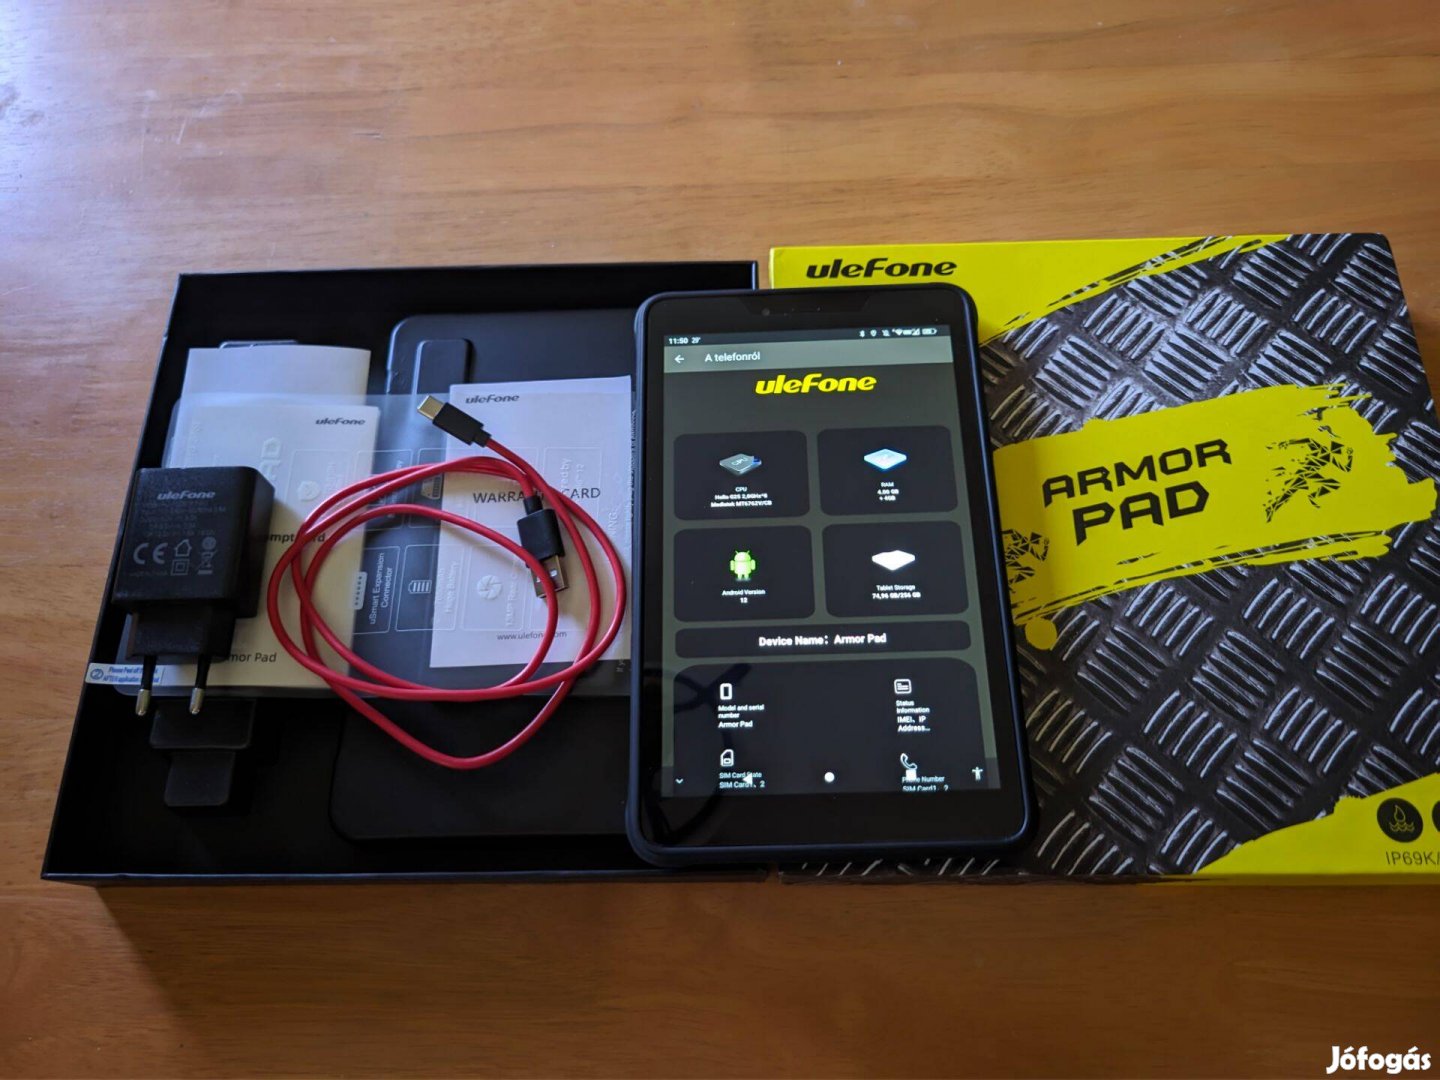 Ulefone Armor Pad Strapa Tablet SIM foglalattal, ujjlenyomat olvasóval